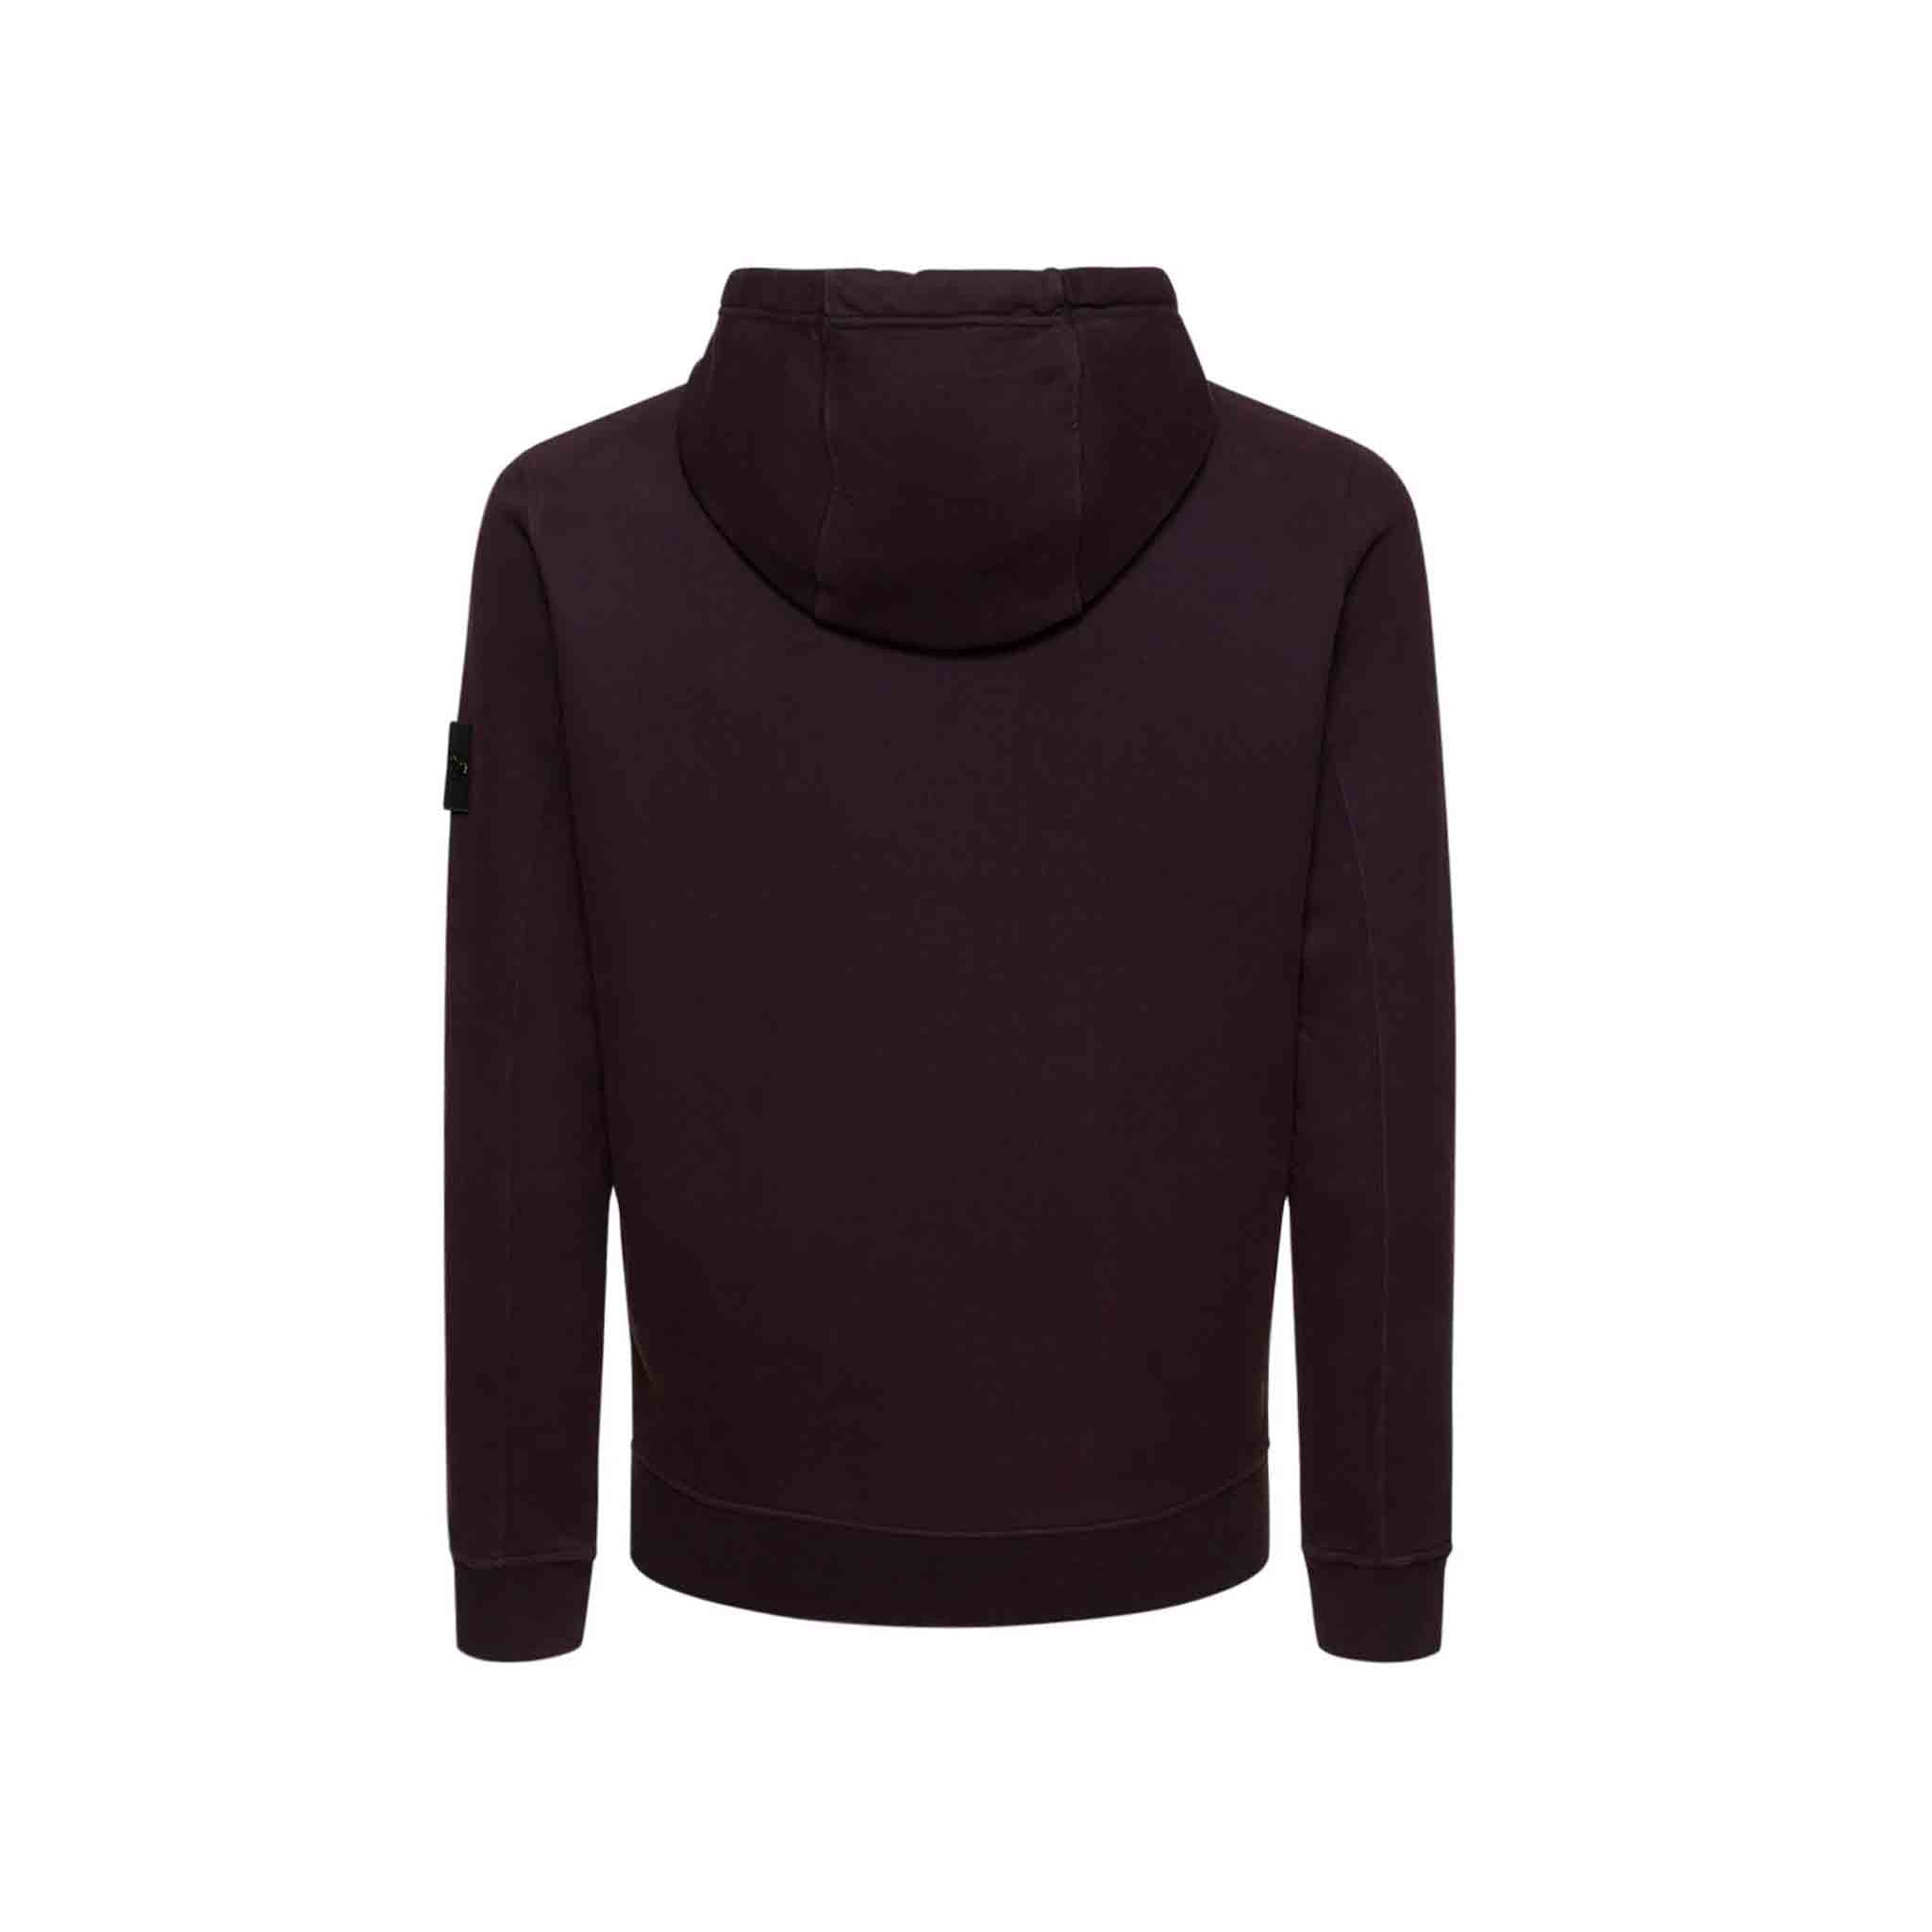 Stone Island Garment Dyed Zip-Up Hooded Sweatshirt in Dark Burgundy